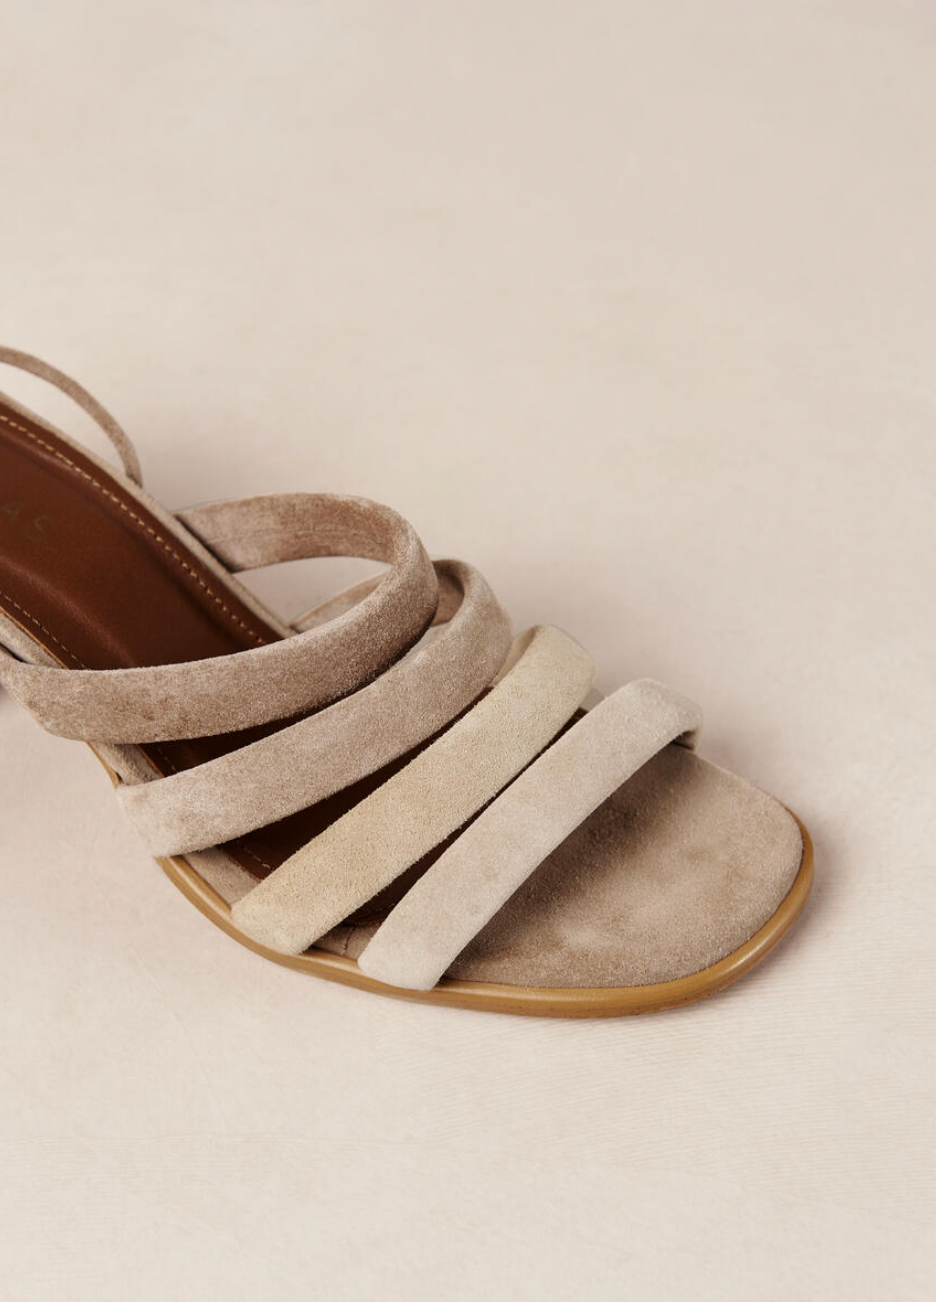 Letizia Shades of Beige Ankle Strap Block Sandals